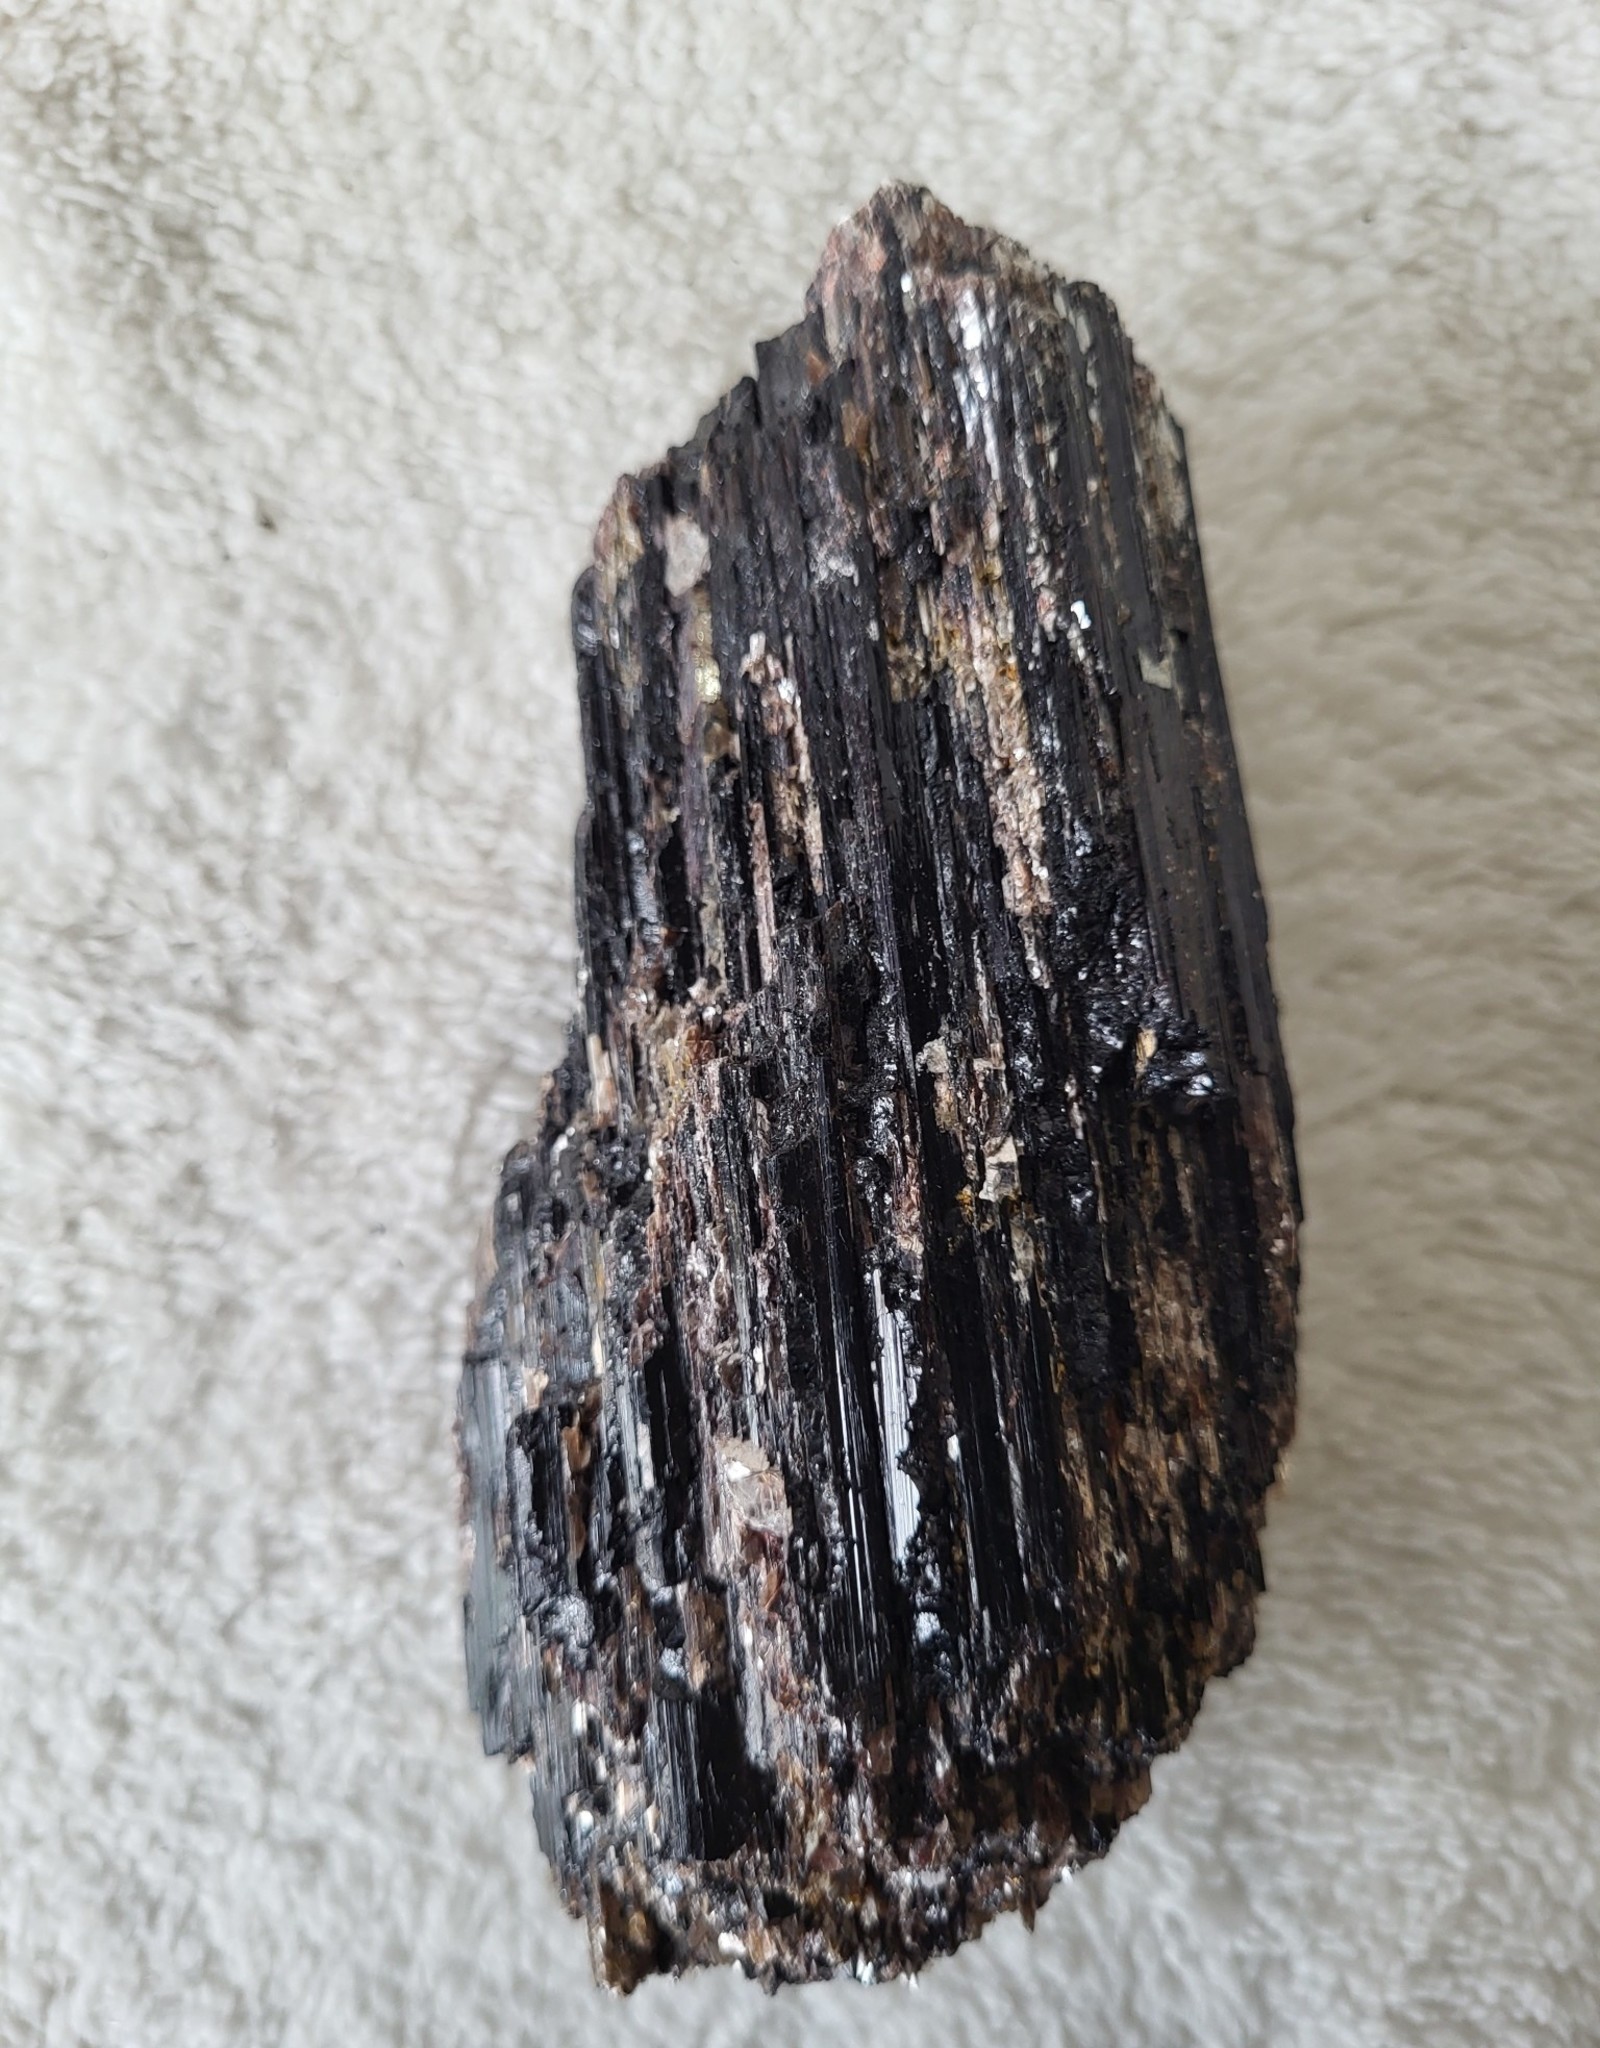 Black Tourmaline Chunk, H